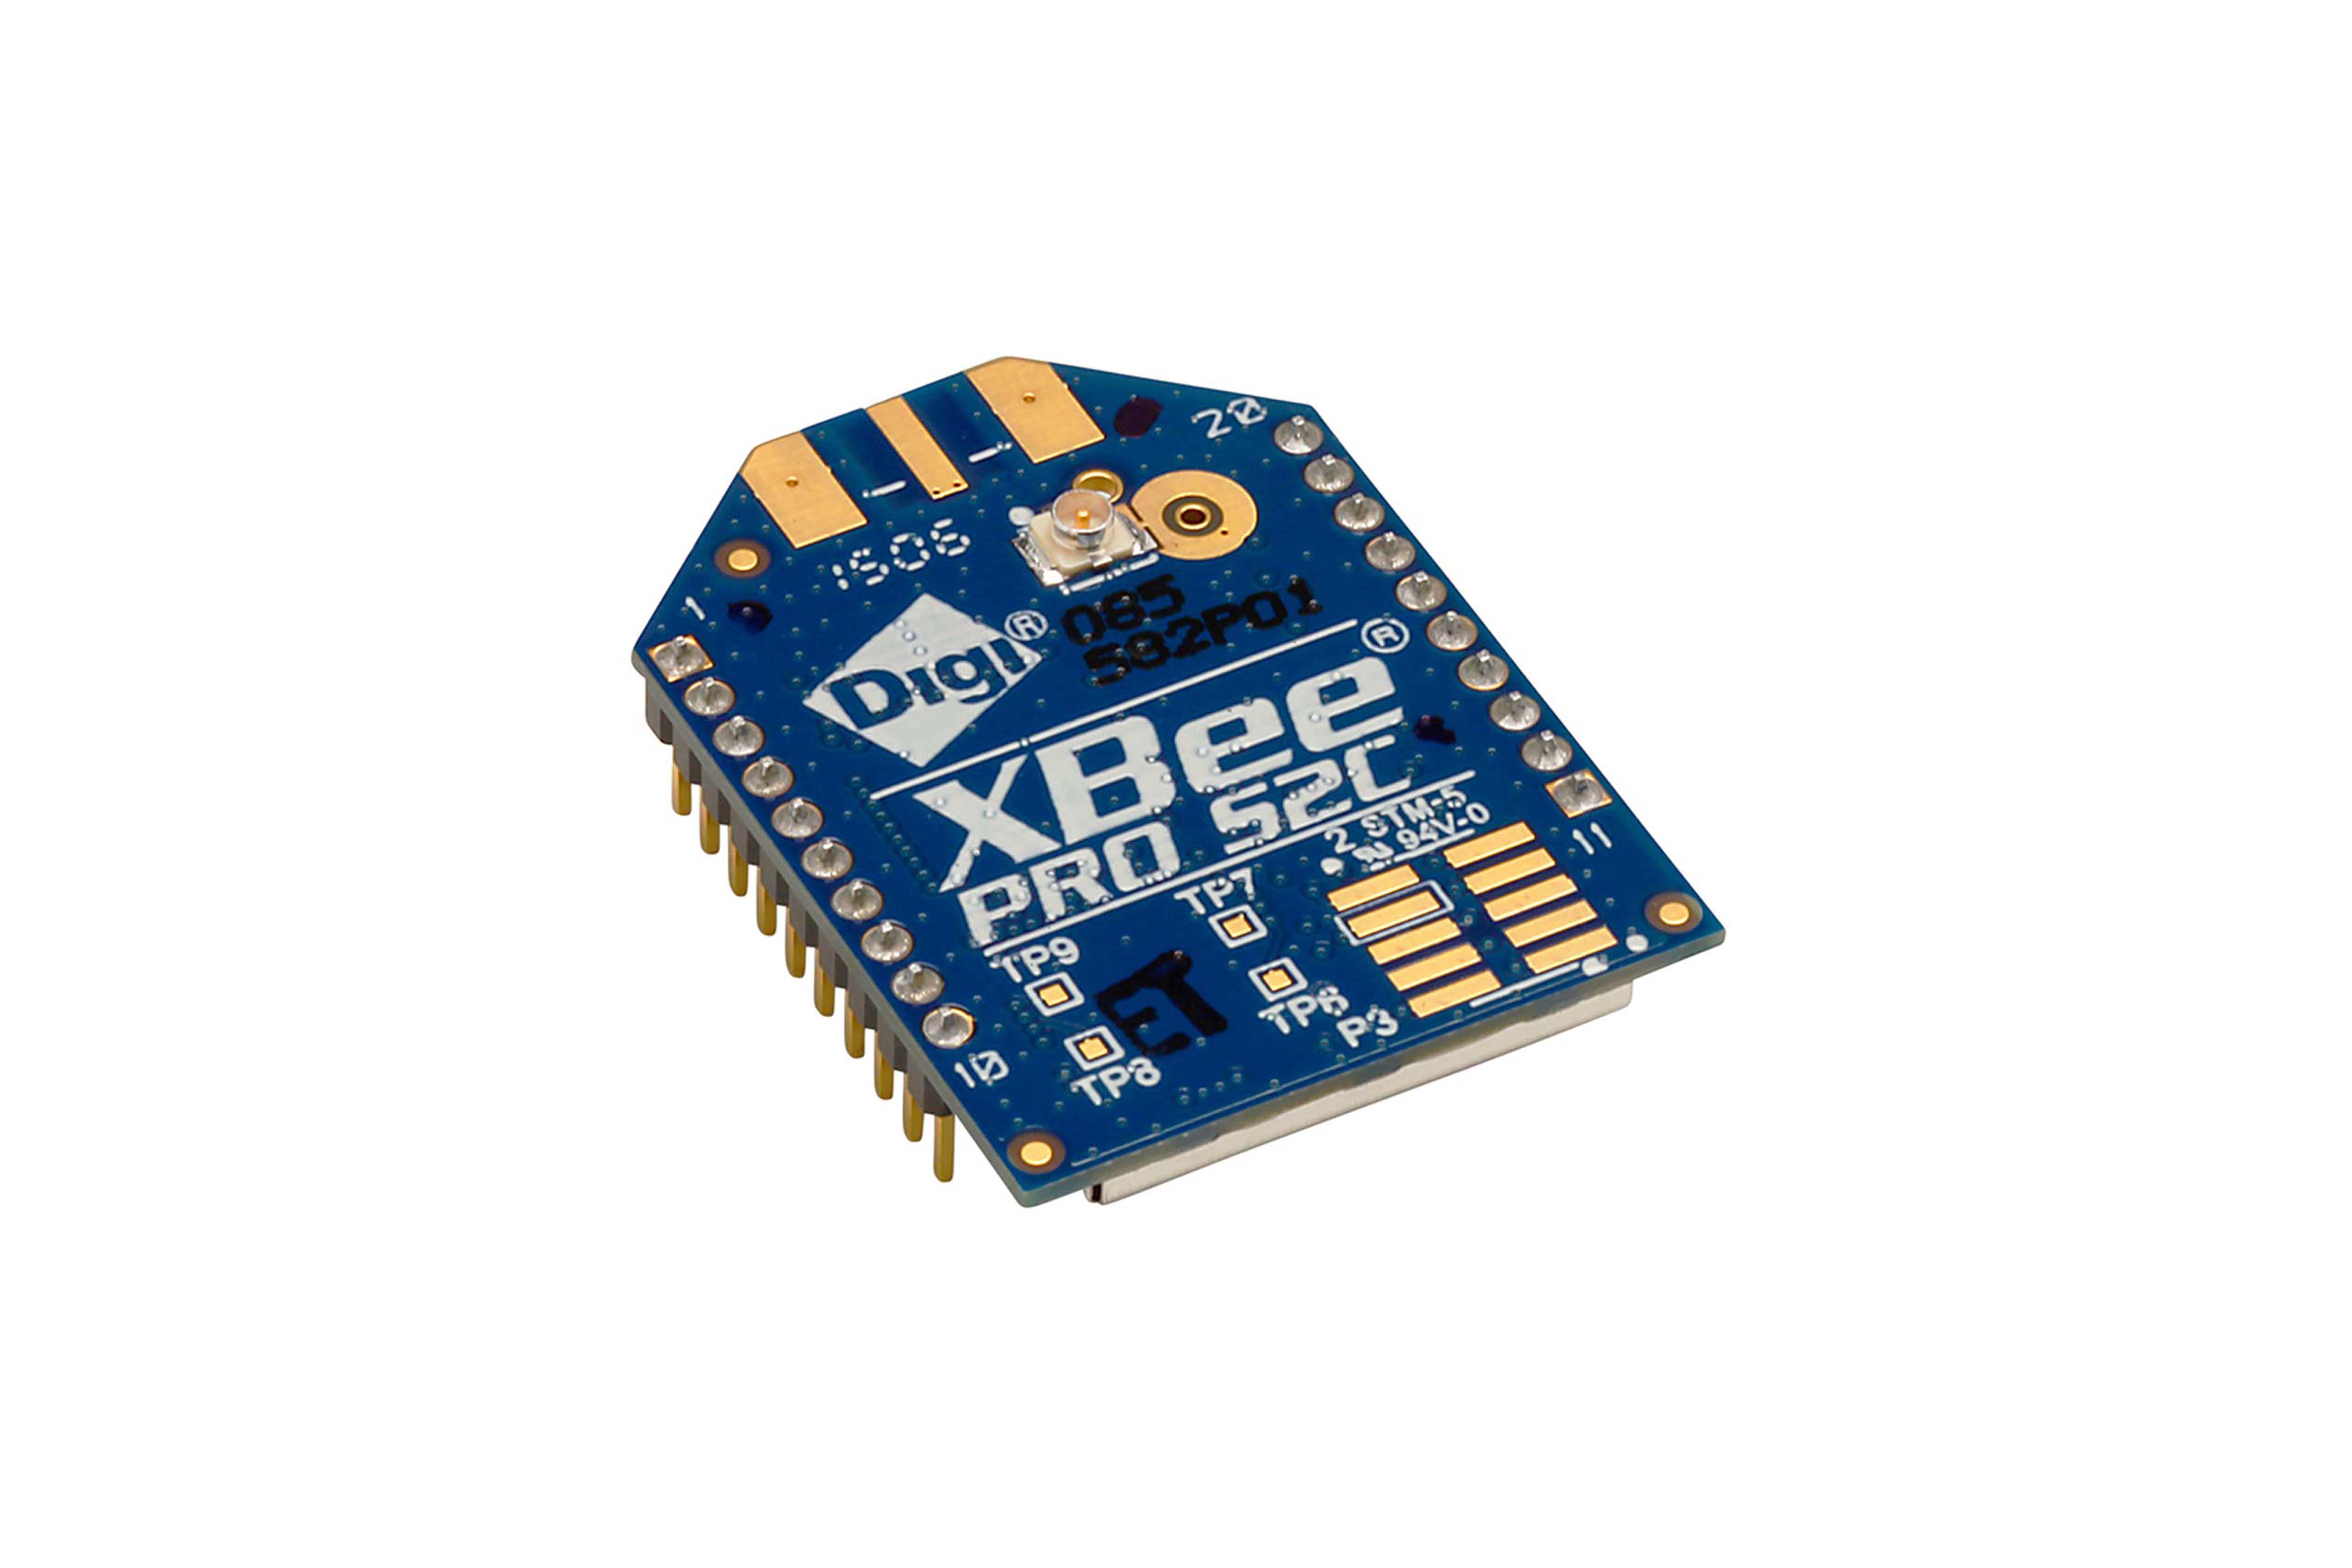 XBee-PRO S2C 802.15.4, 2.4 GHz, SMT